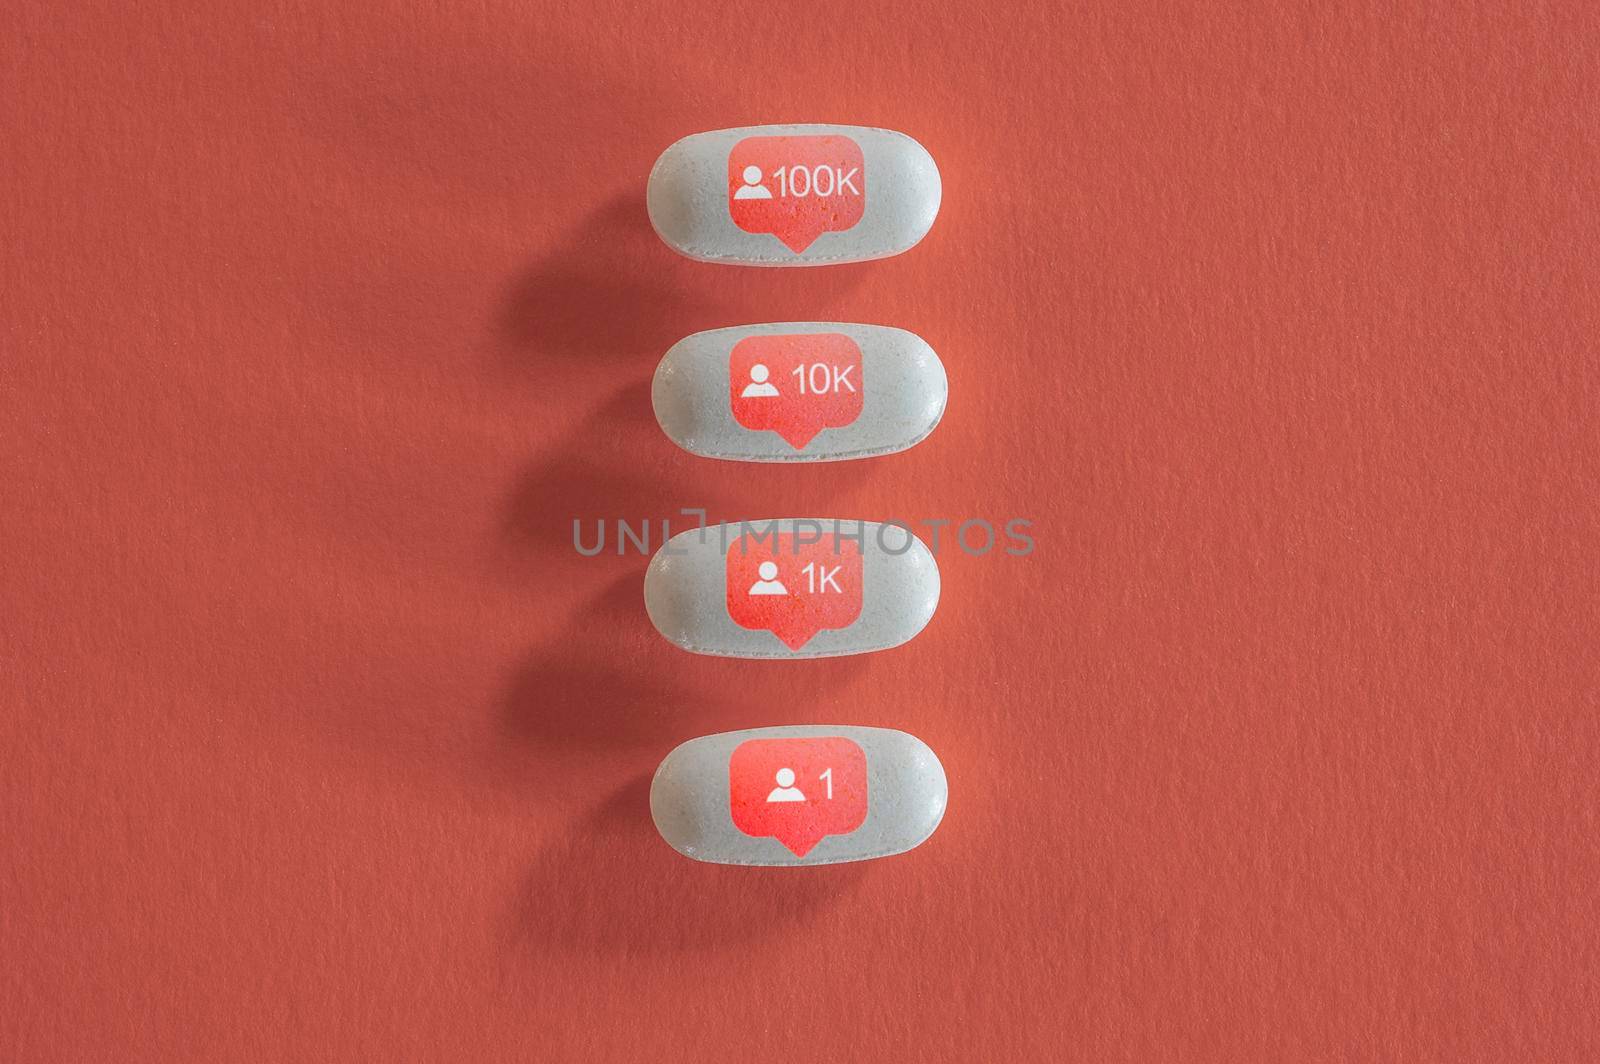 White pills with social media symbols by SimmiSimons